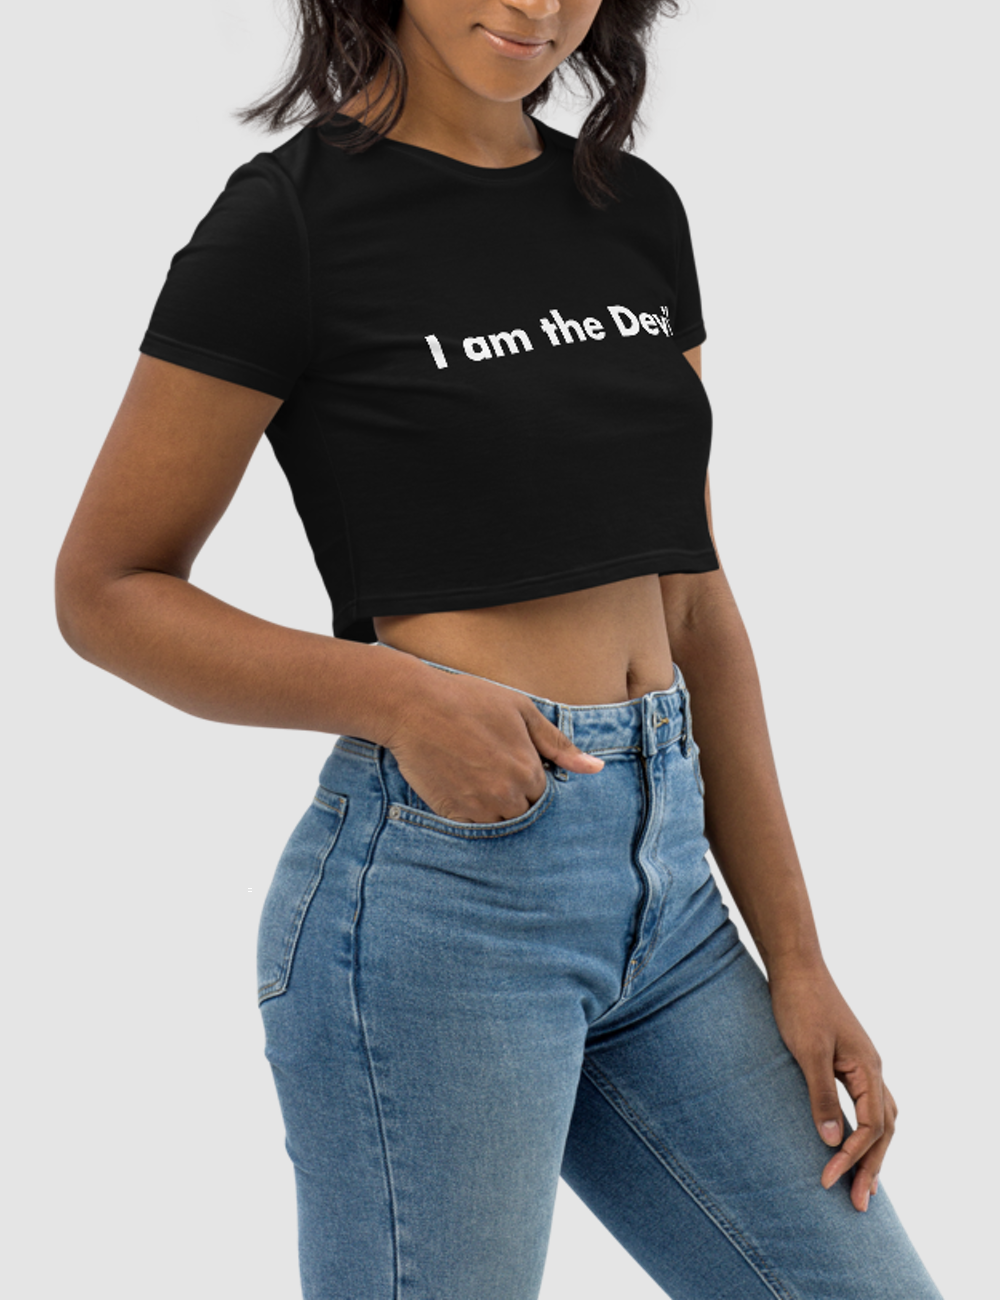 I Am The Devil | Women's Crop Top T-Shirt OniTakai